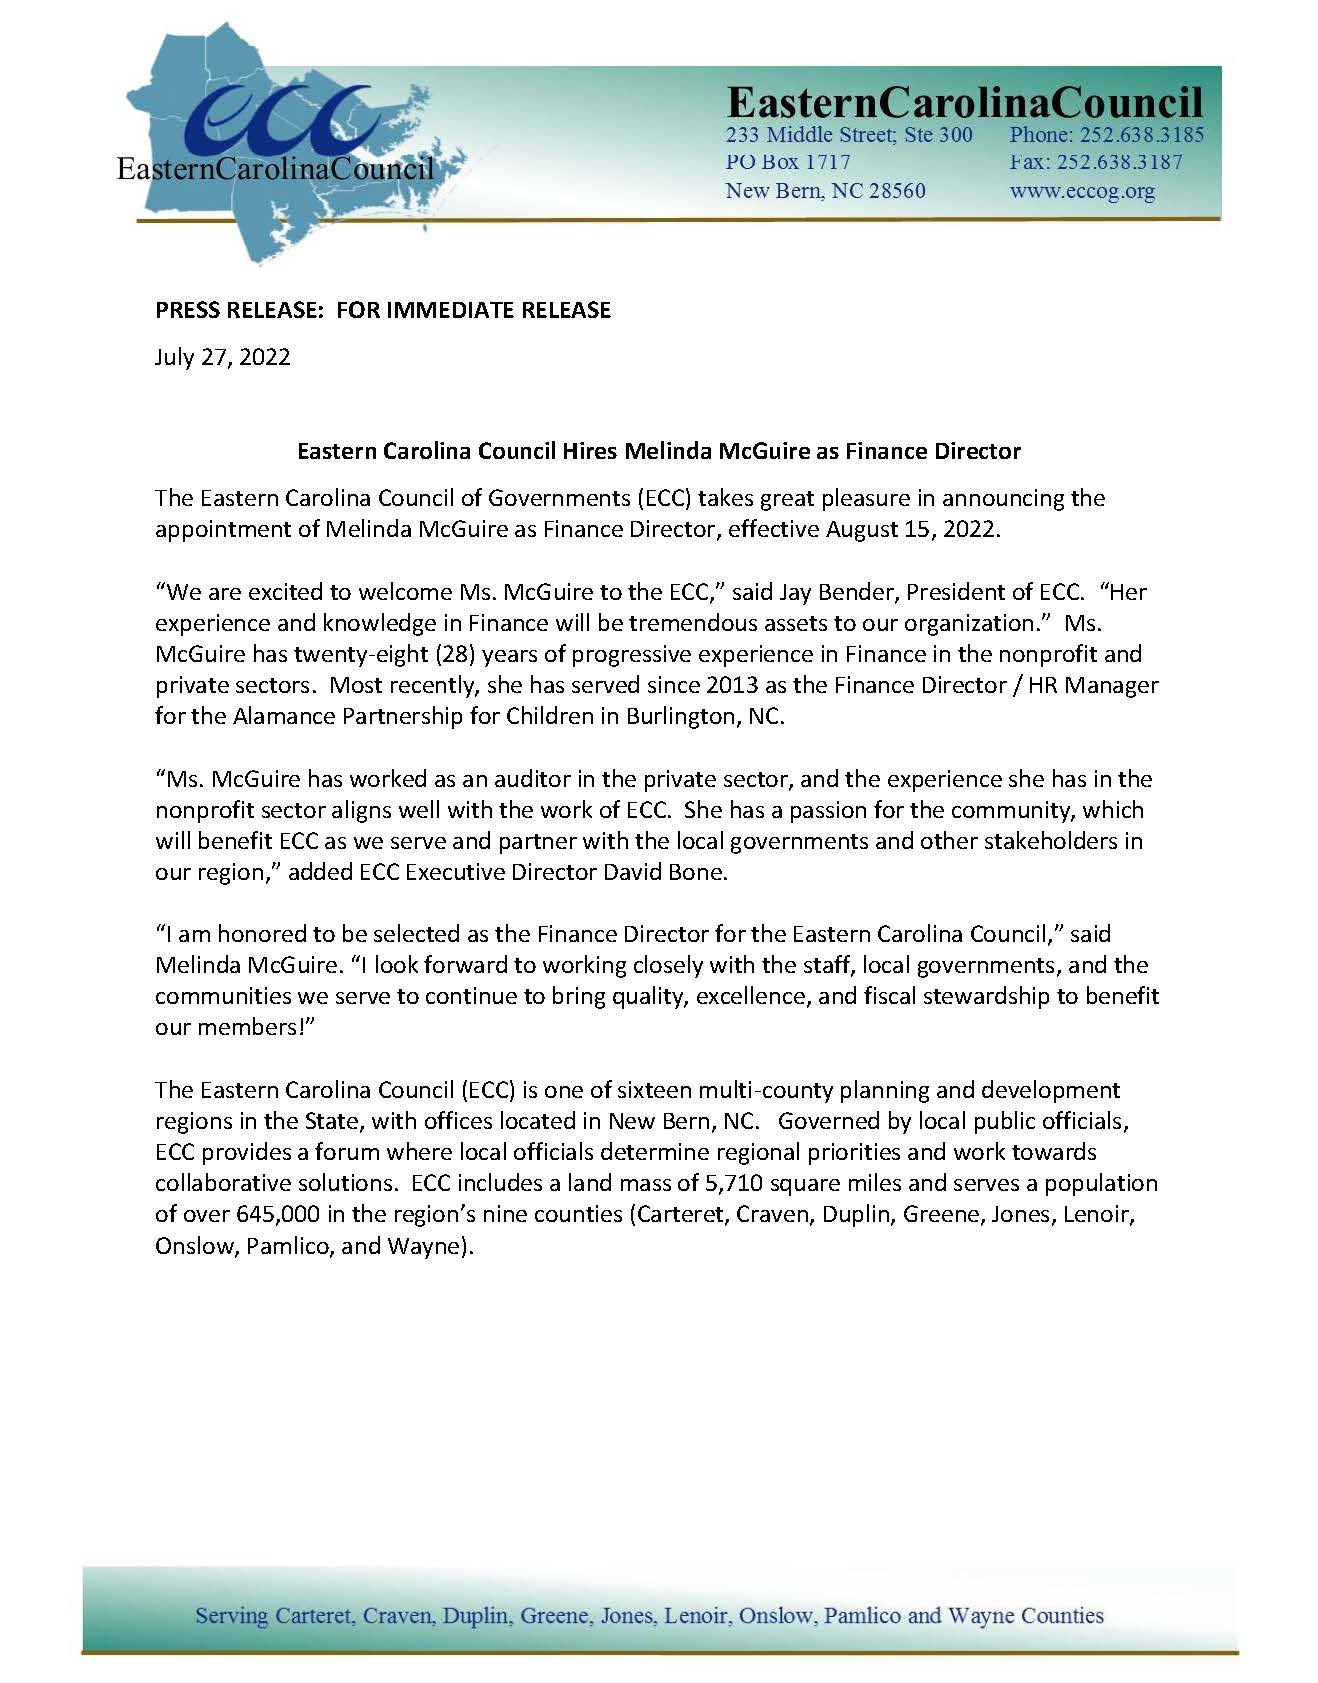 Press Release - ECC Hires Melinda McGuire as Finance Director - 22.07.27